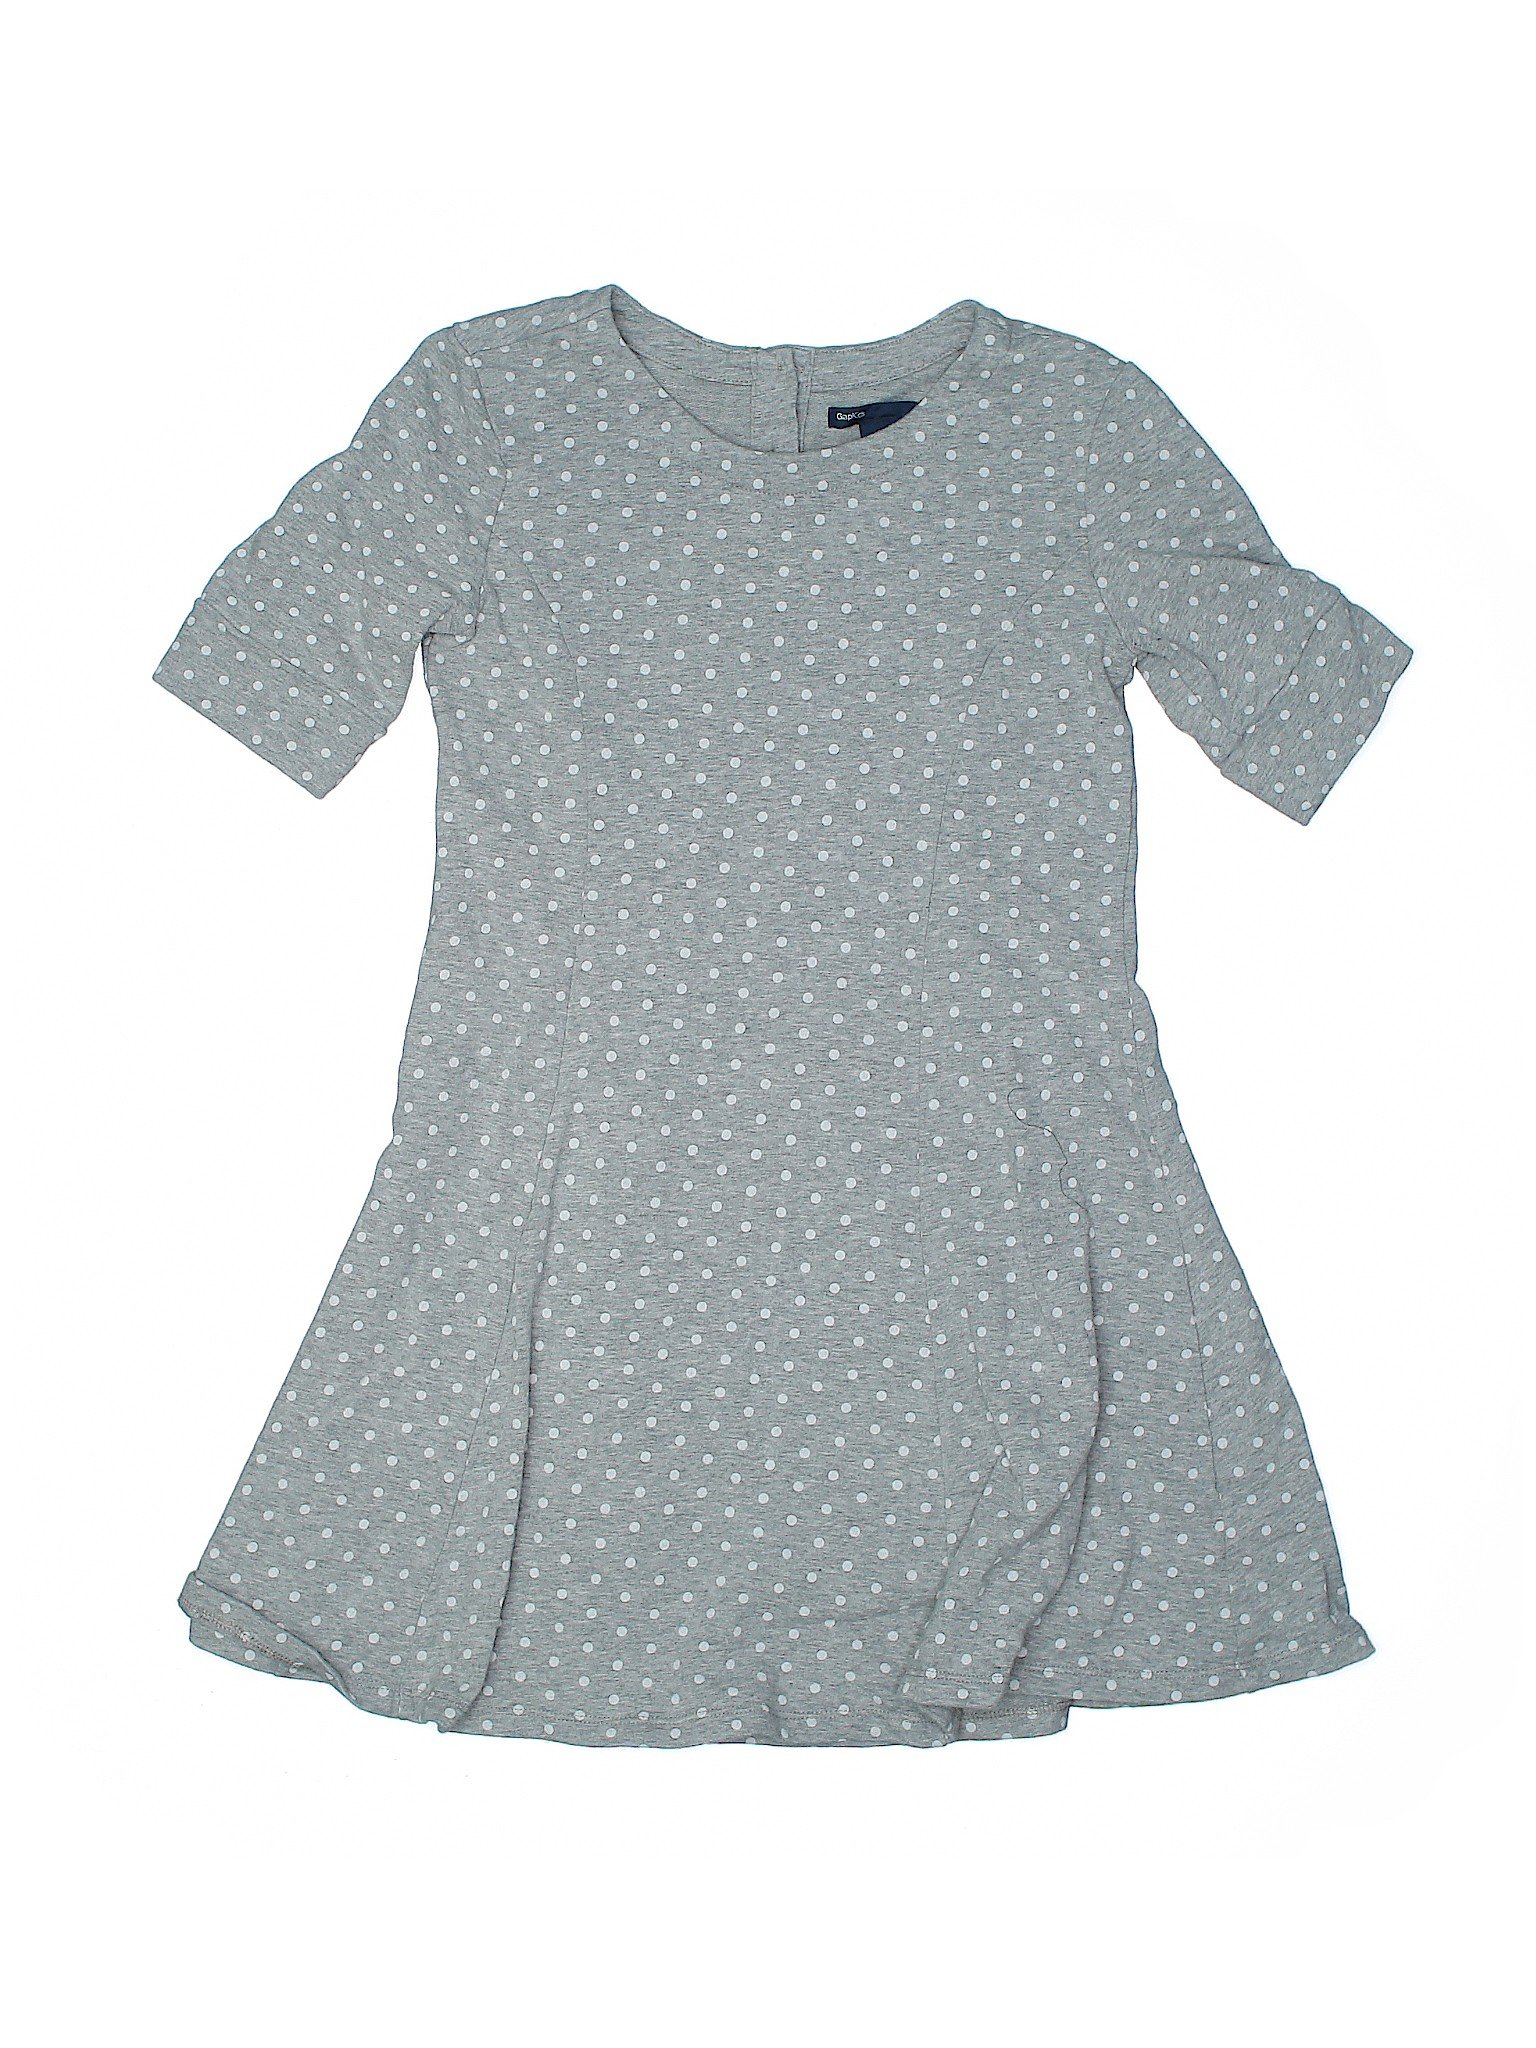 Gap Kids Girls Gray Dress 10 | eBay